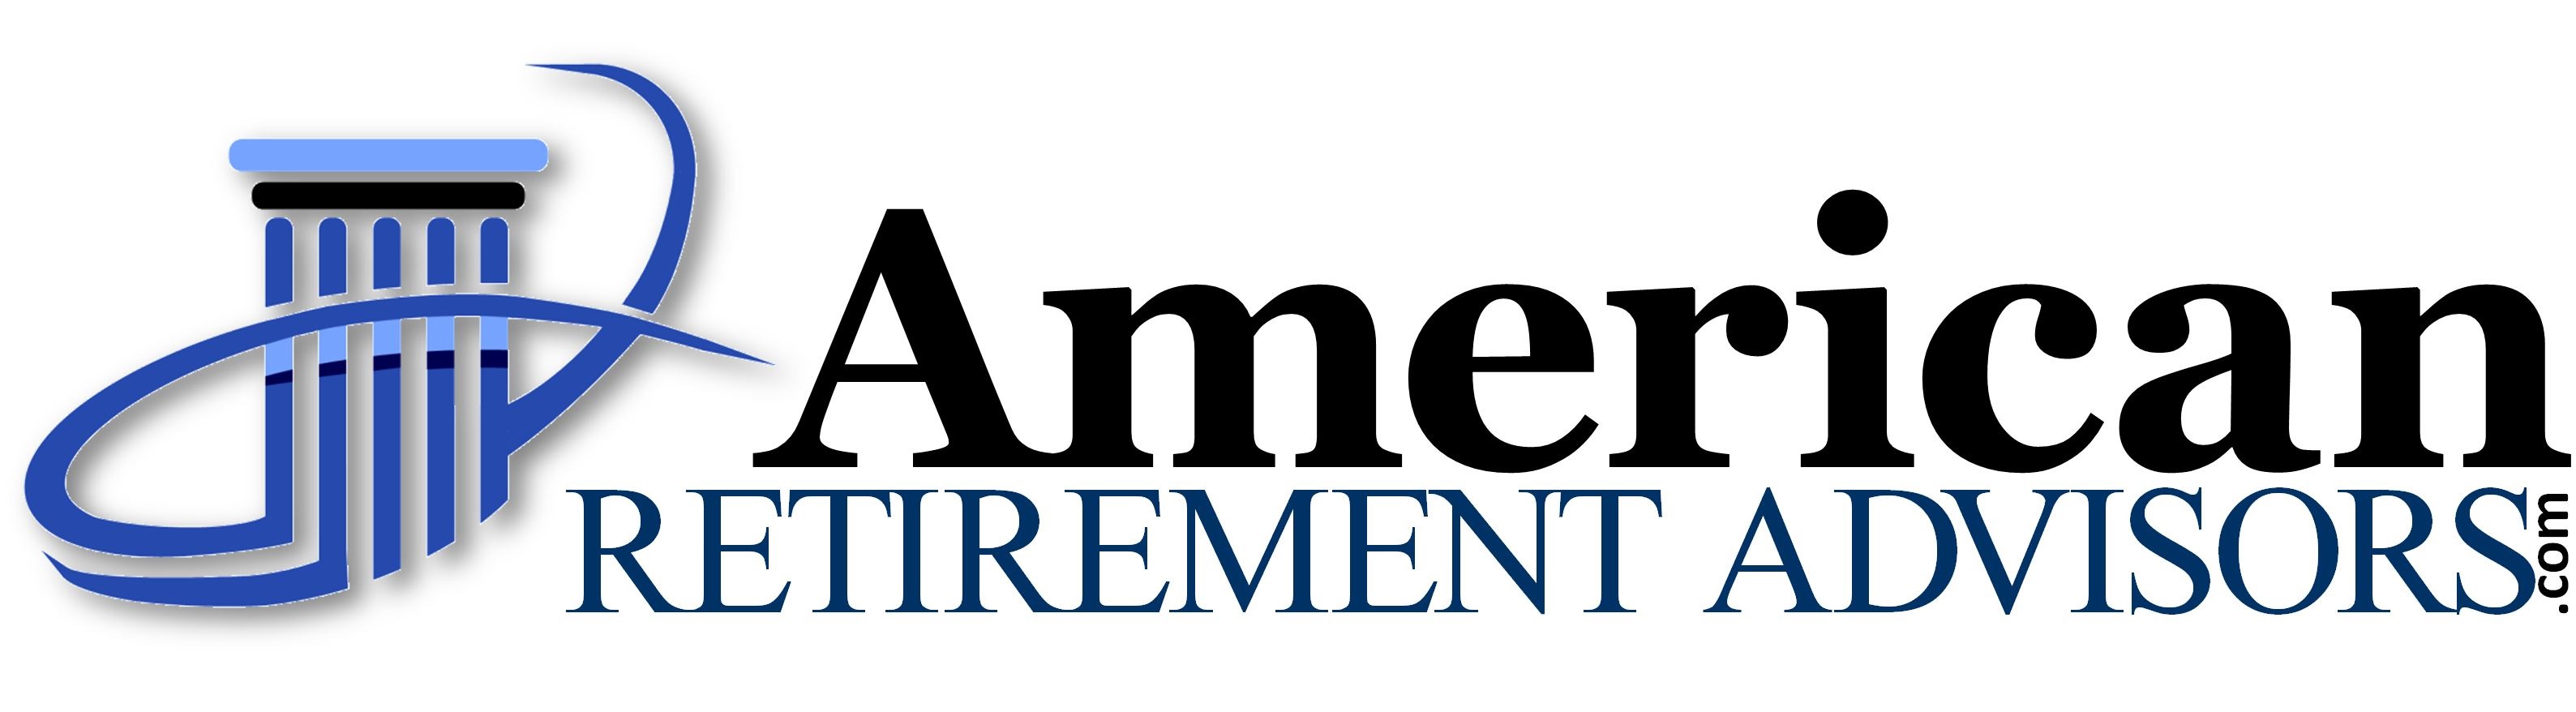 American Retirement Advisors logo